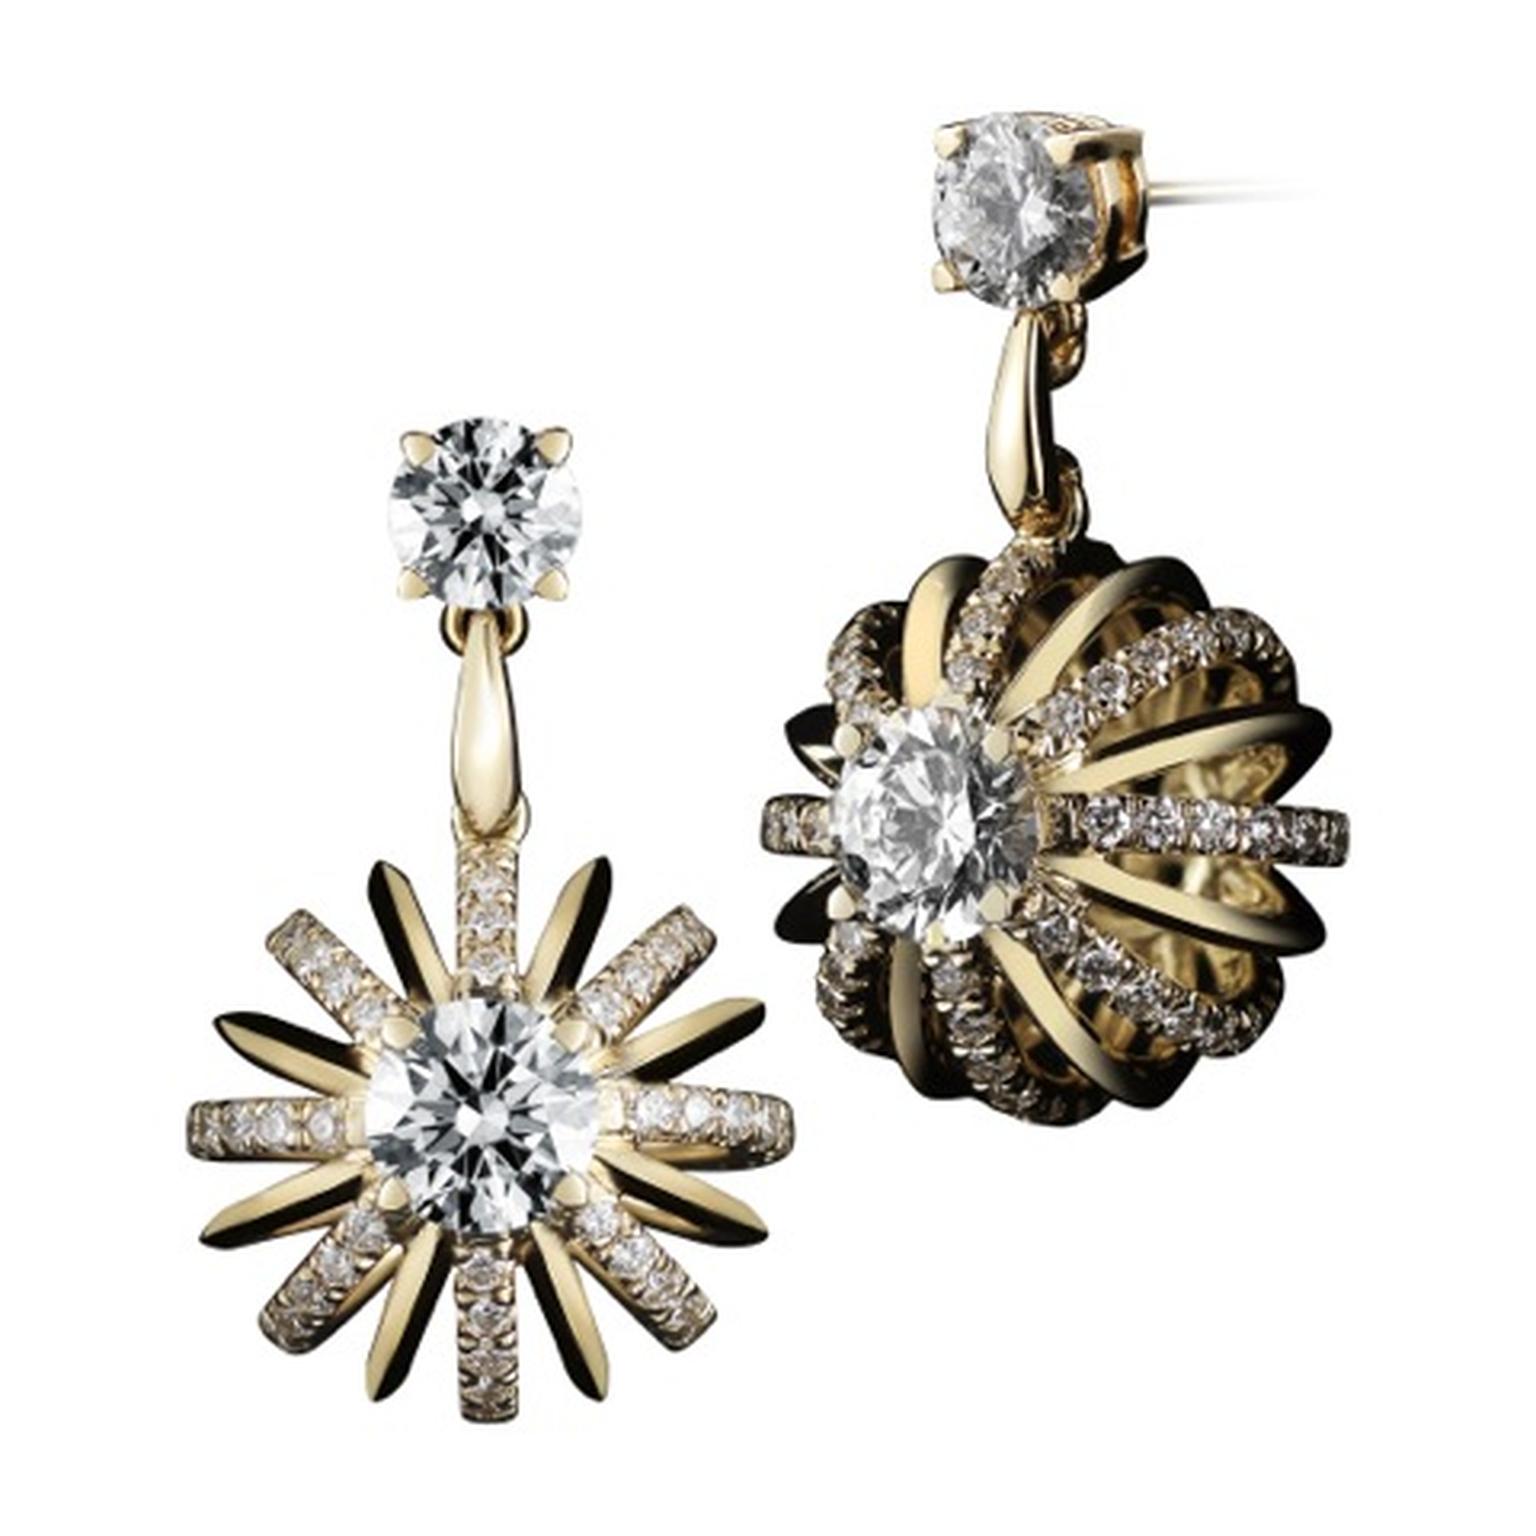 Alexandra Mor yellow gold Dangling Snowflake earrings with diamonds.